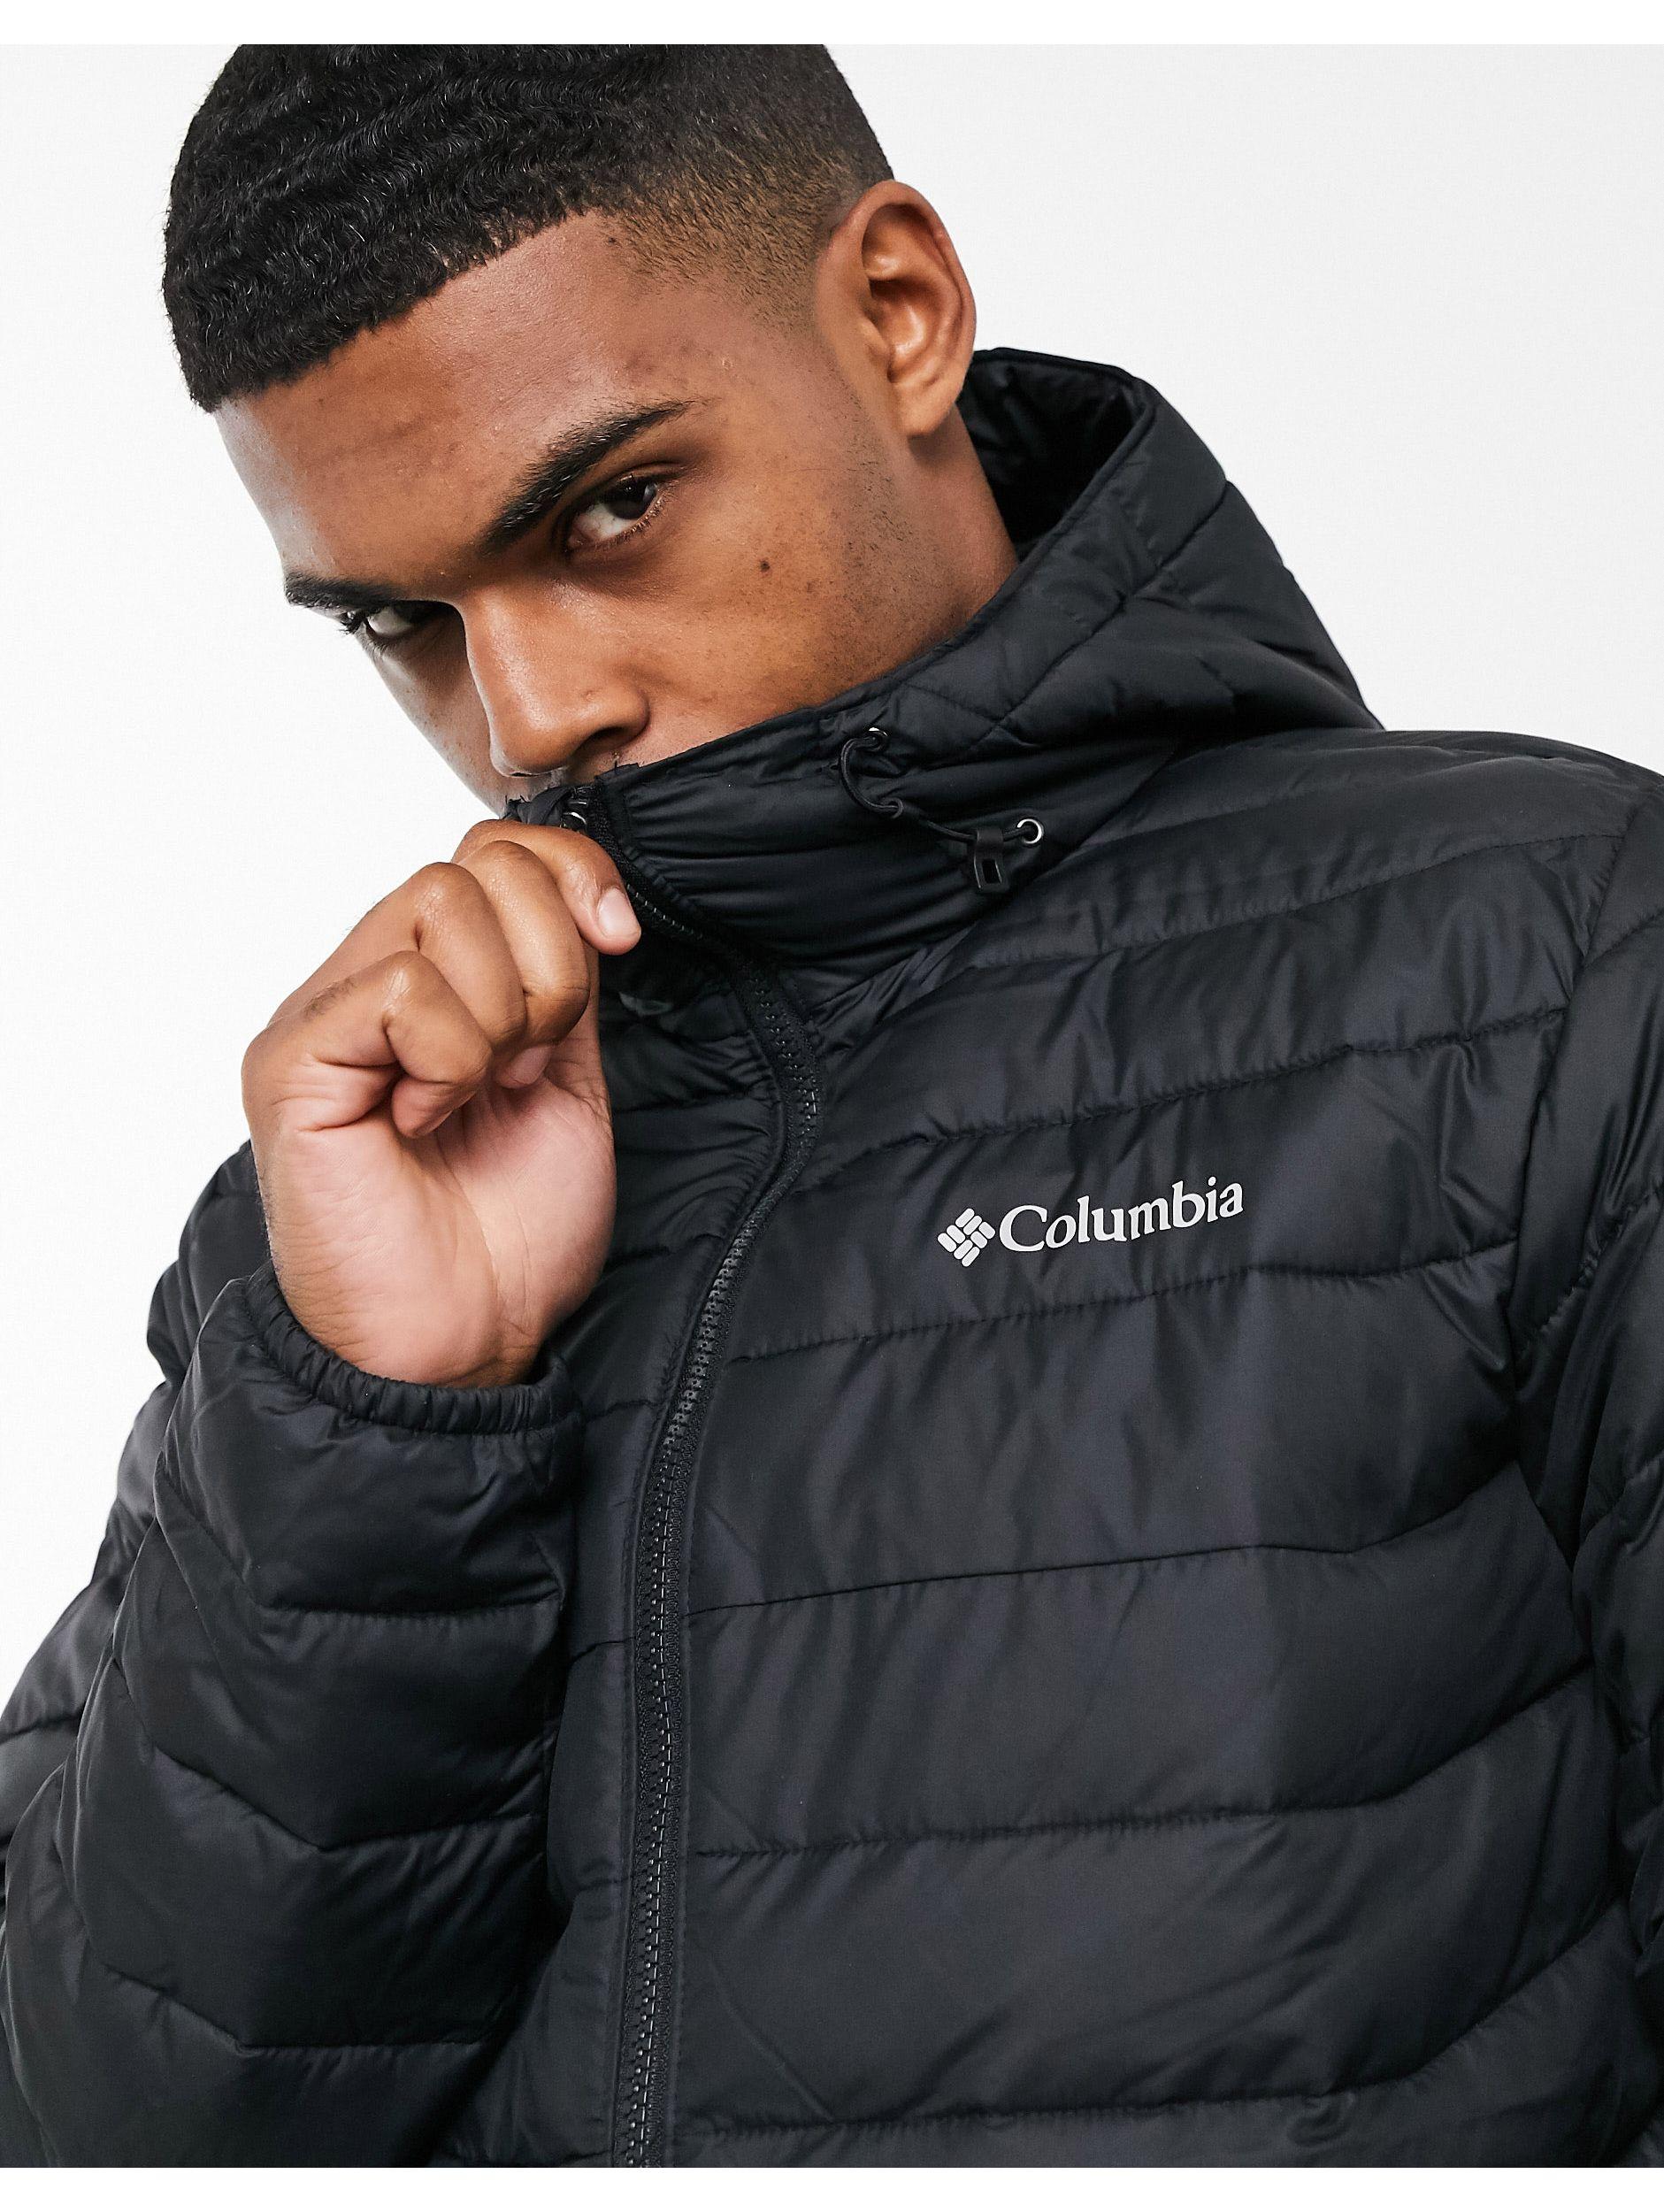 Columbia Powder Lite Hooded Jacket in Black for Men - Lyst